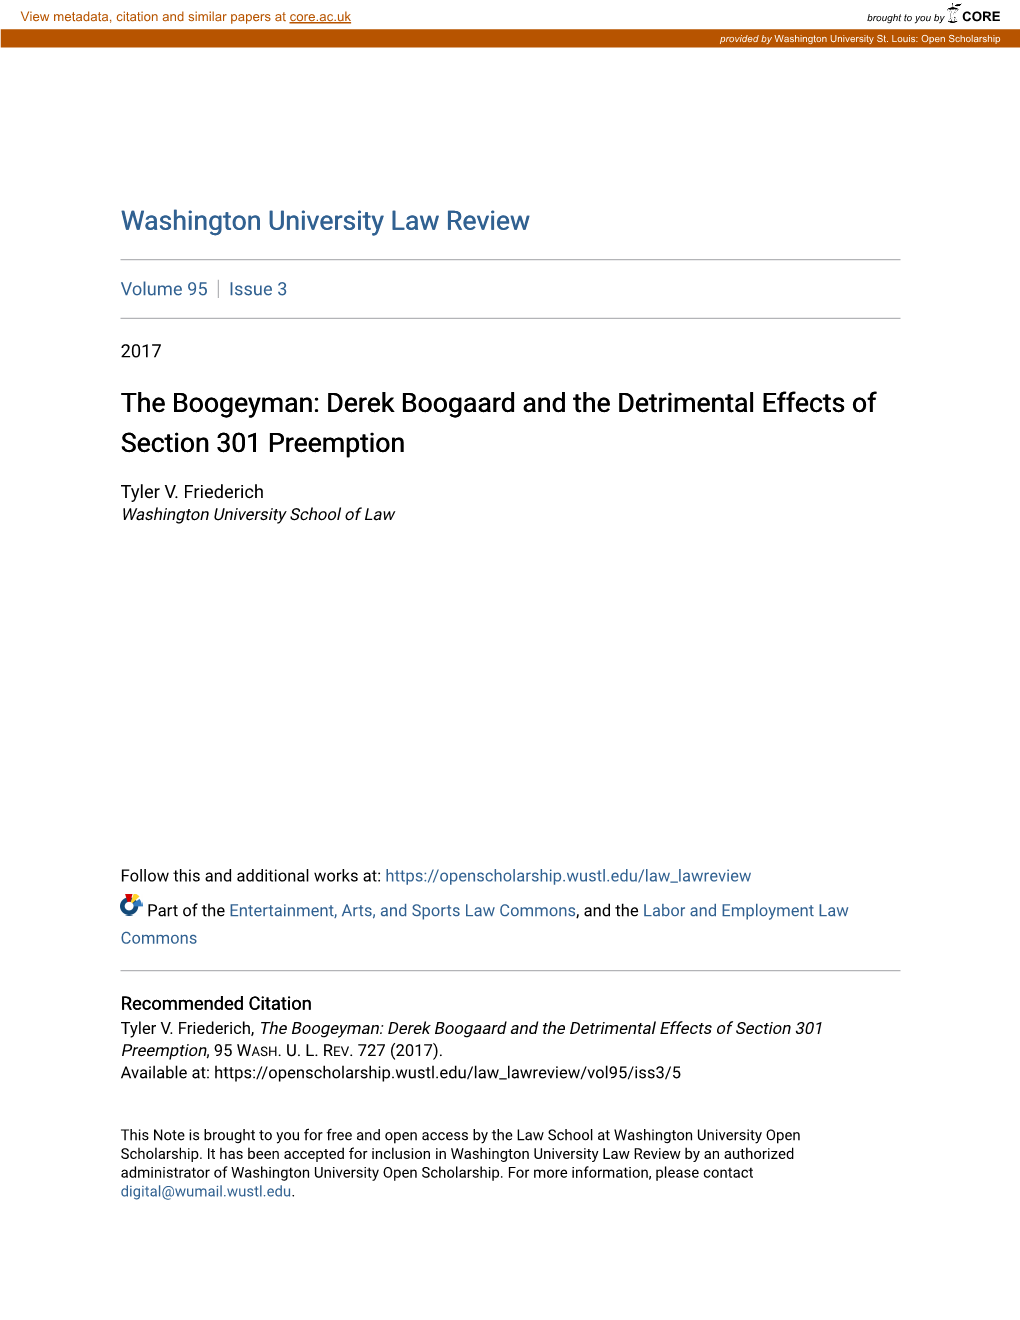 Derek Boogaard and the Detrimental Effects of Section 301 Preemption